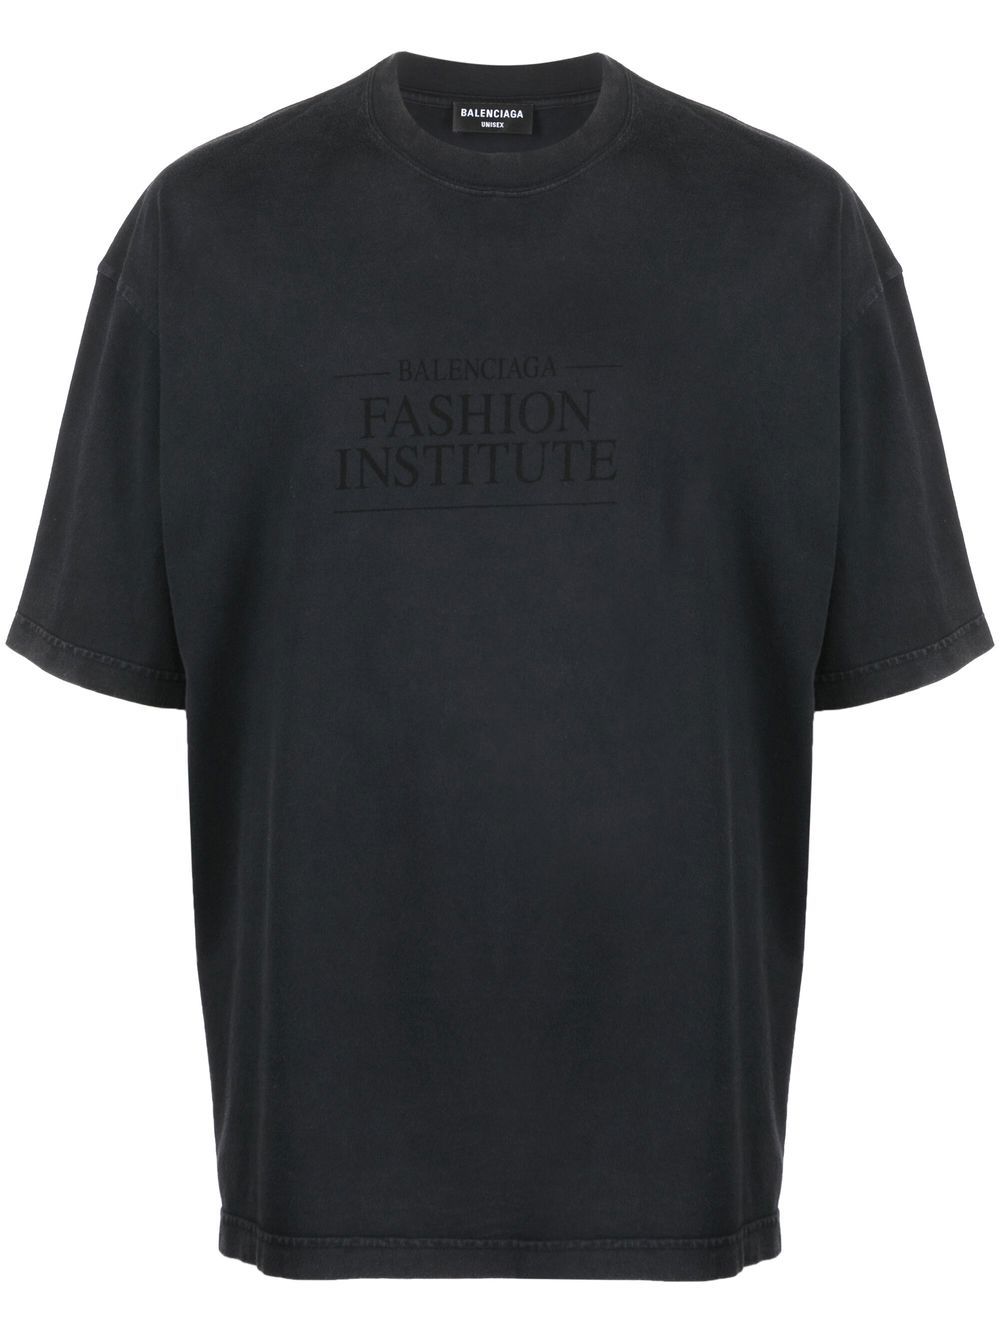 Balenciaga Fashion Institute print T-shirt - Black